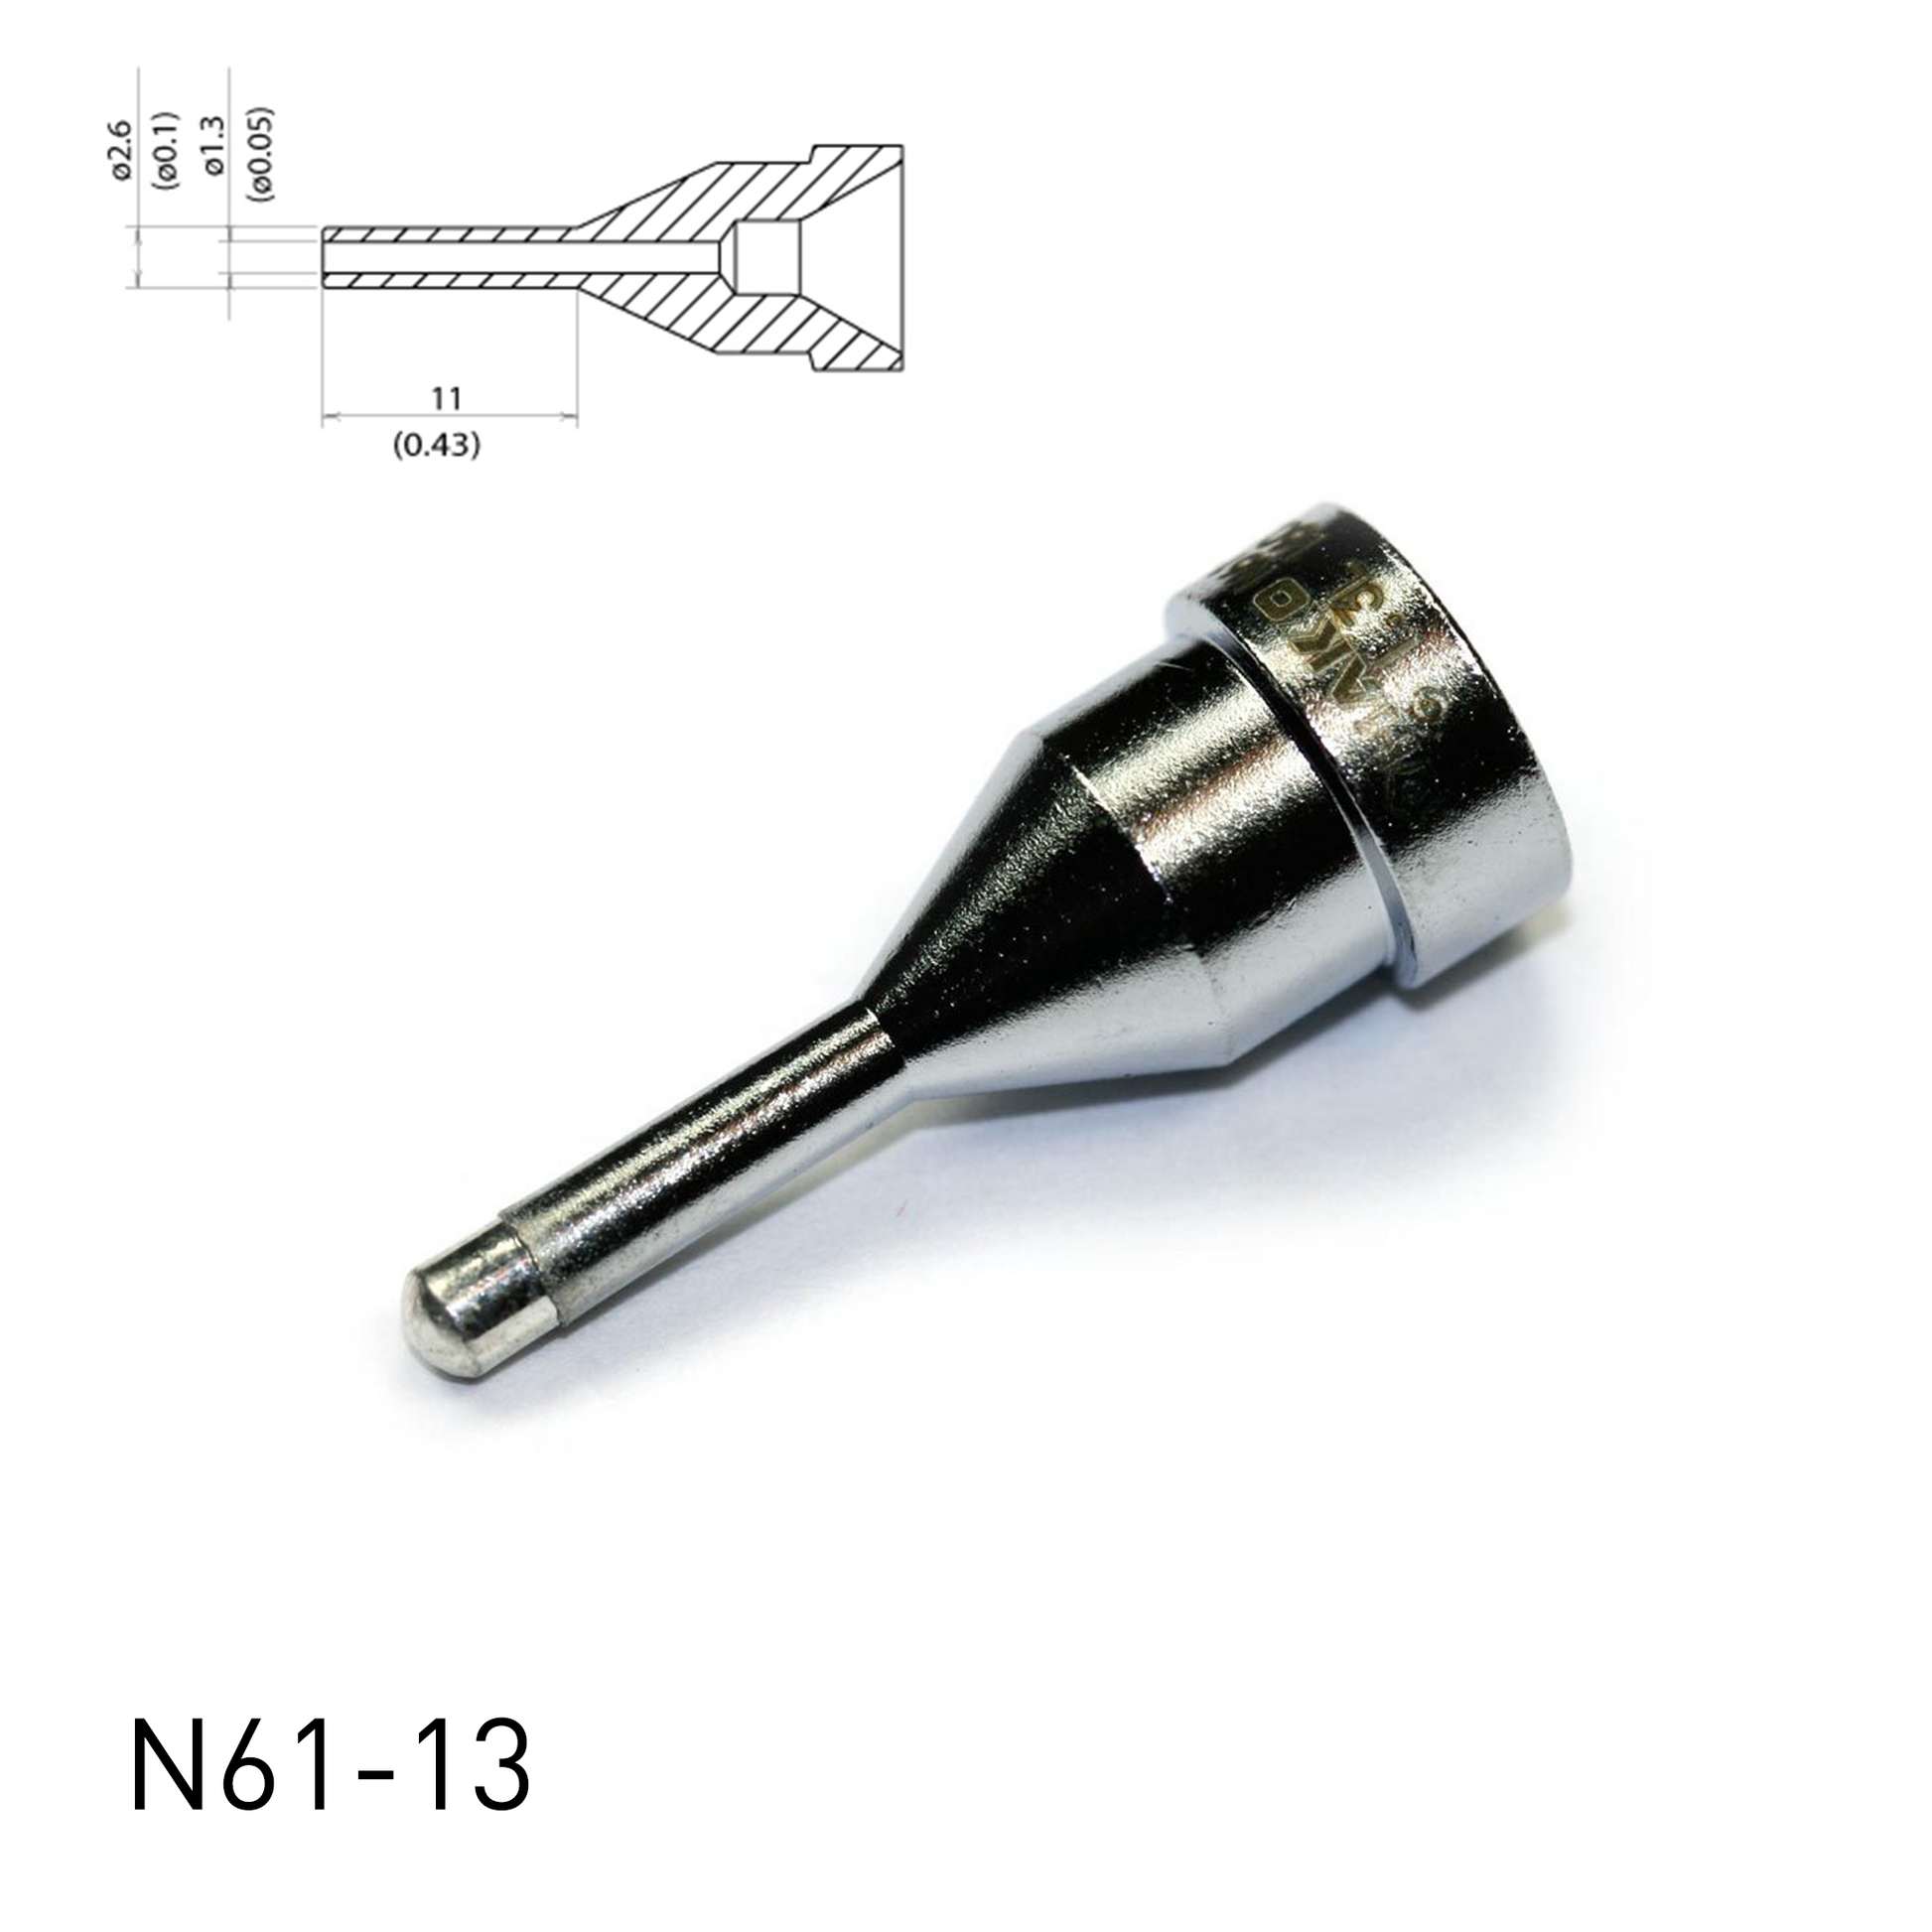 Hakko Products Pte Ltd_ N61-13 Desoldering Nozzle_ Nozzles_ Hakko Products